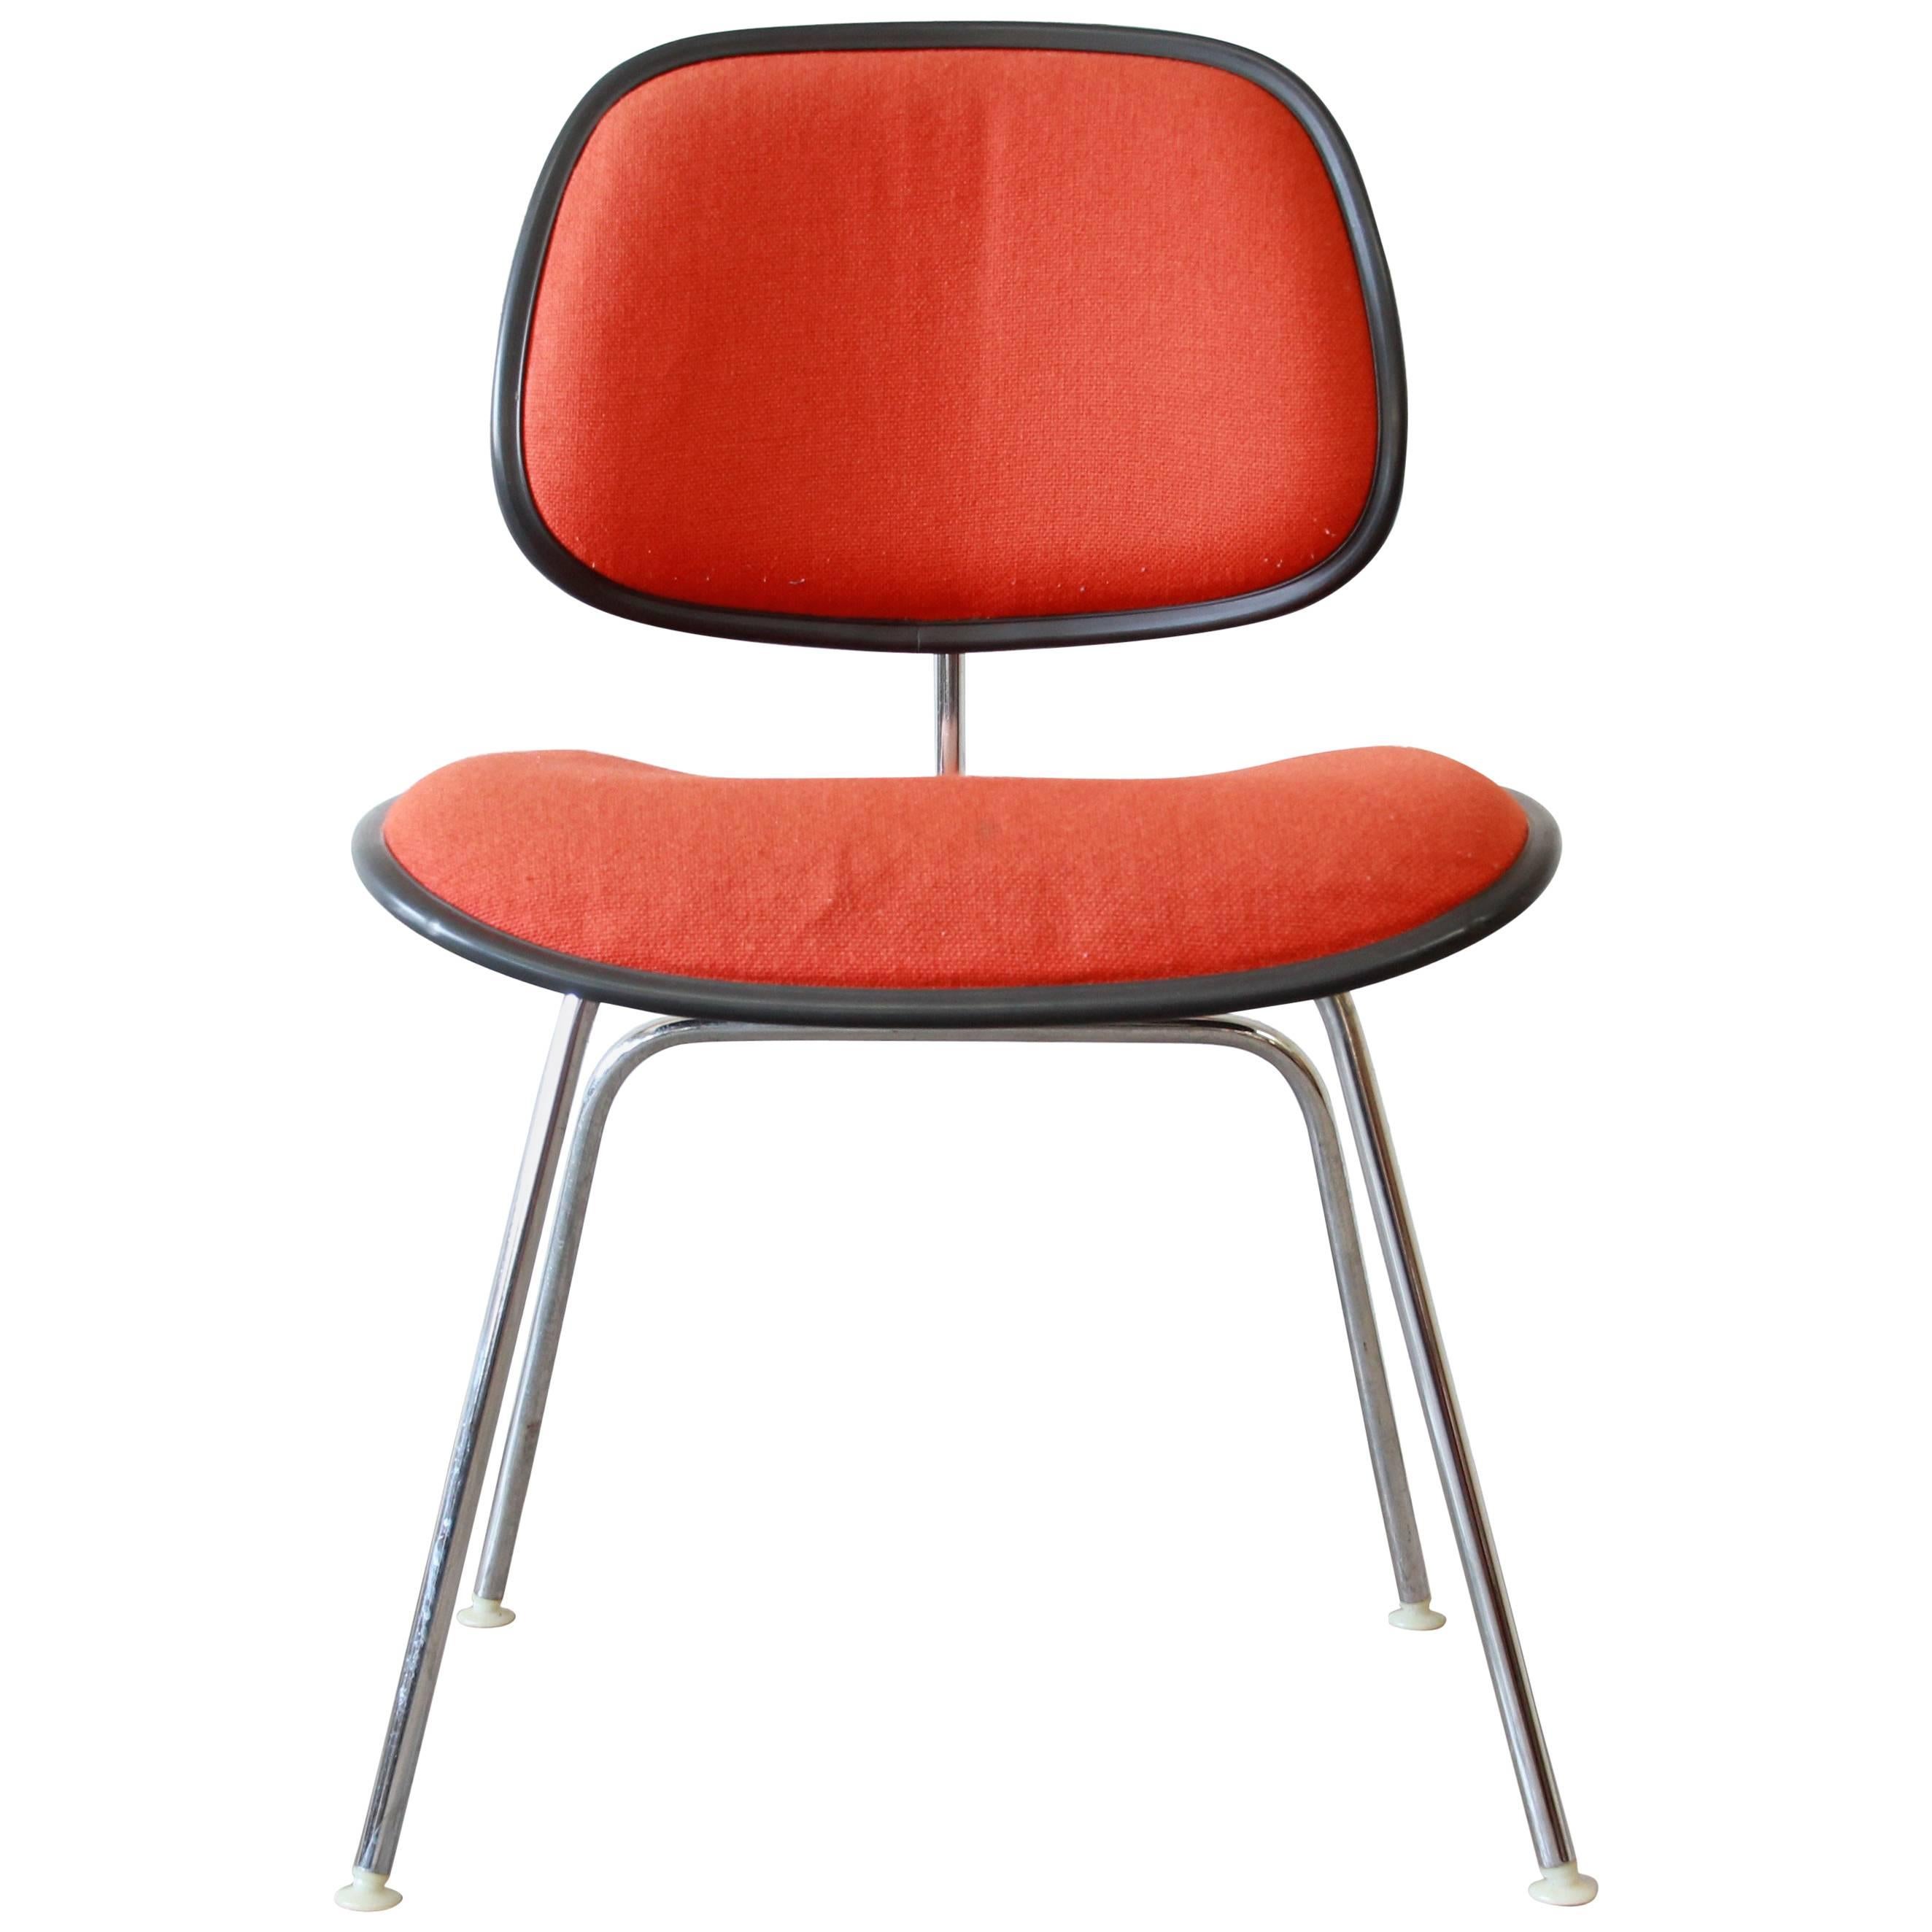 Original Eames for Herman Miller DCM Chair